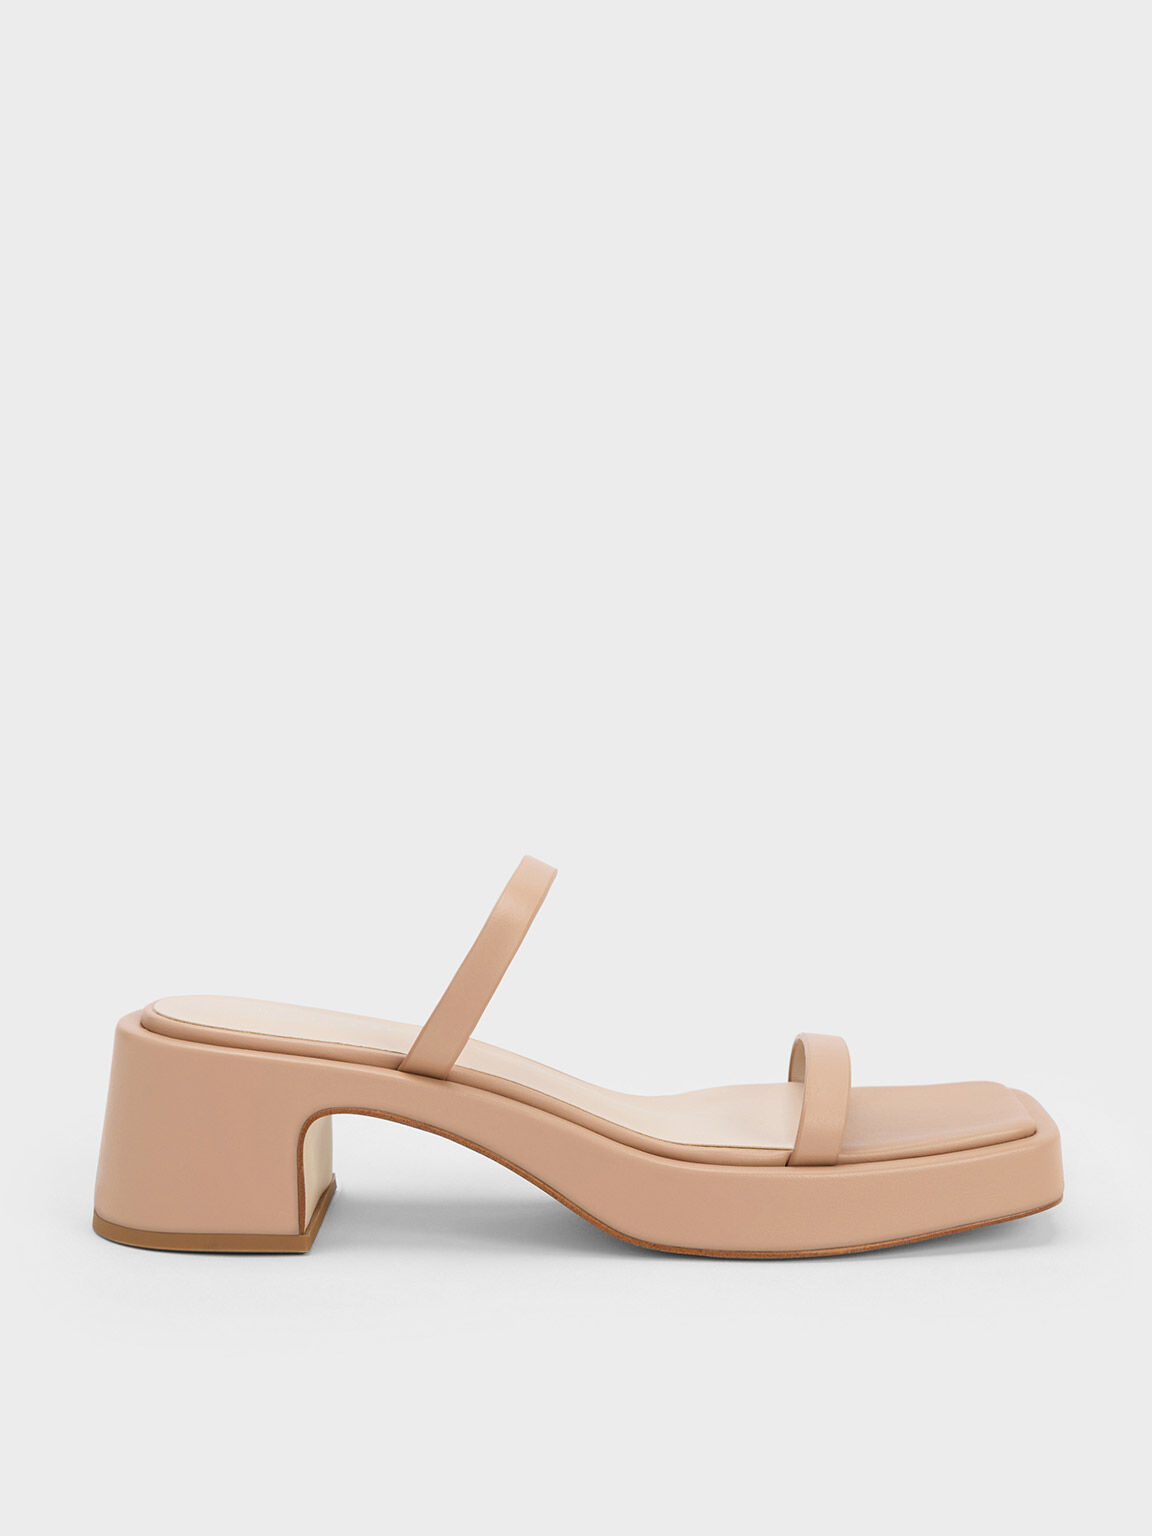 Nude Square-Toe Platform Sandals - CHARLES & KEITH US